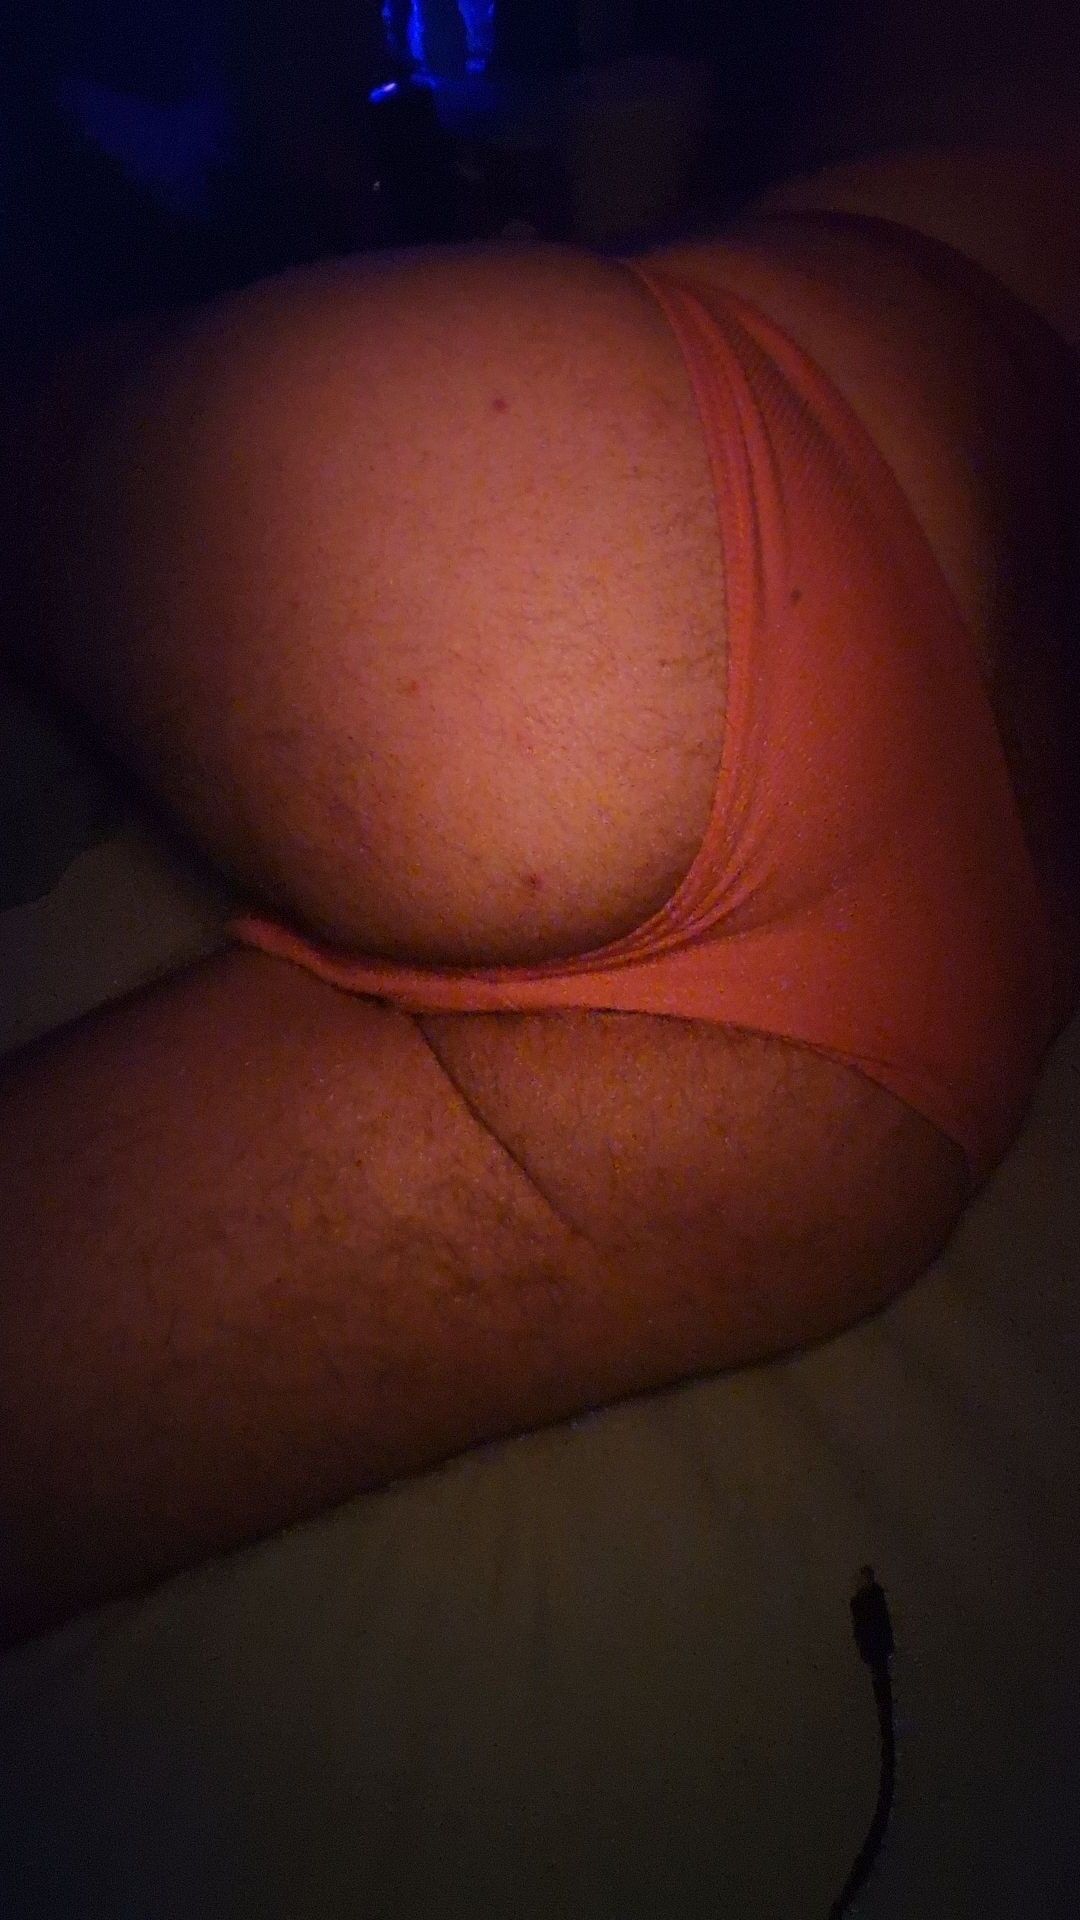 How is my ass?